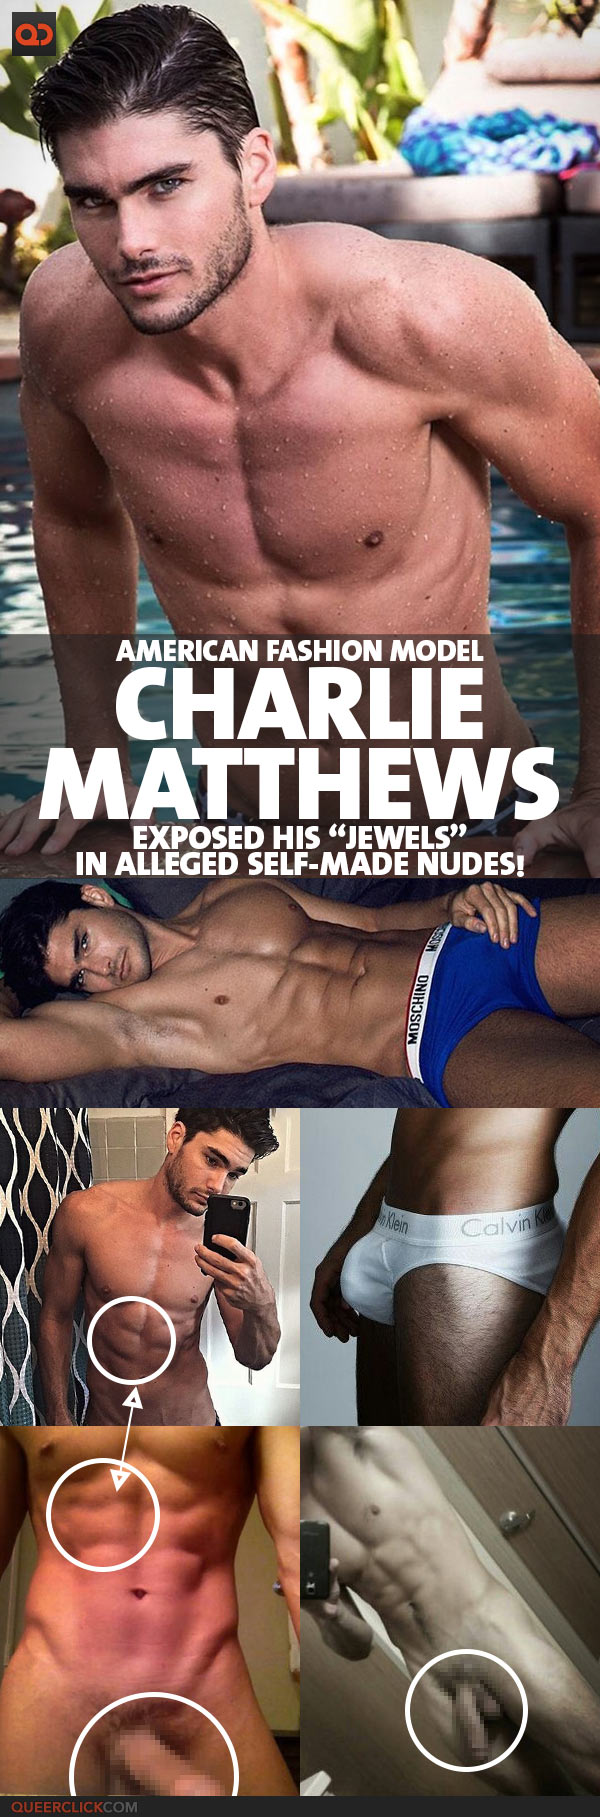 Charlie matthews nude